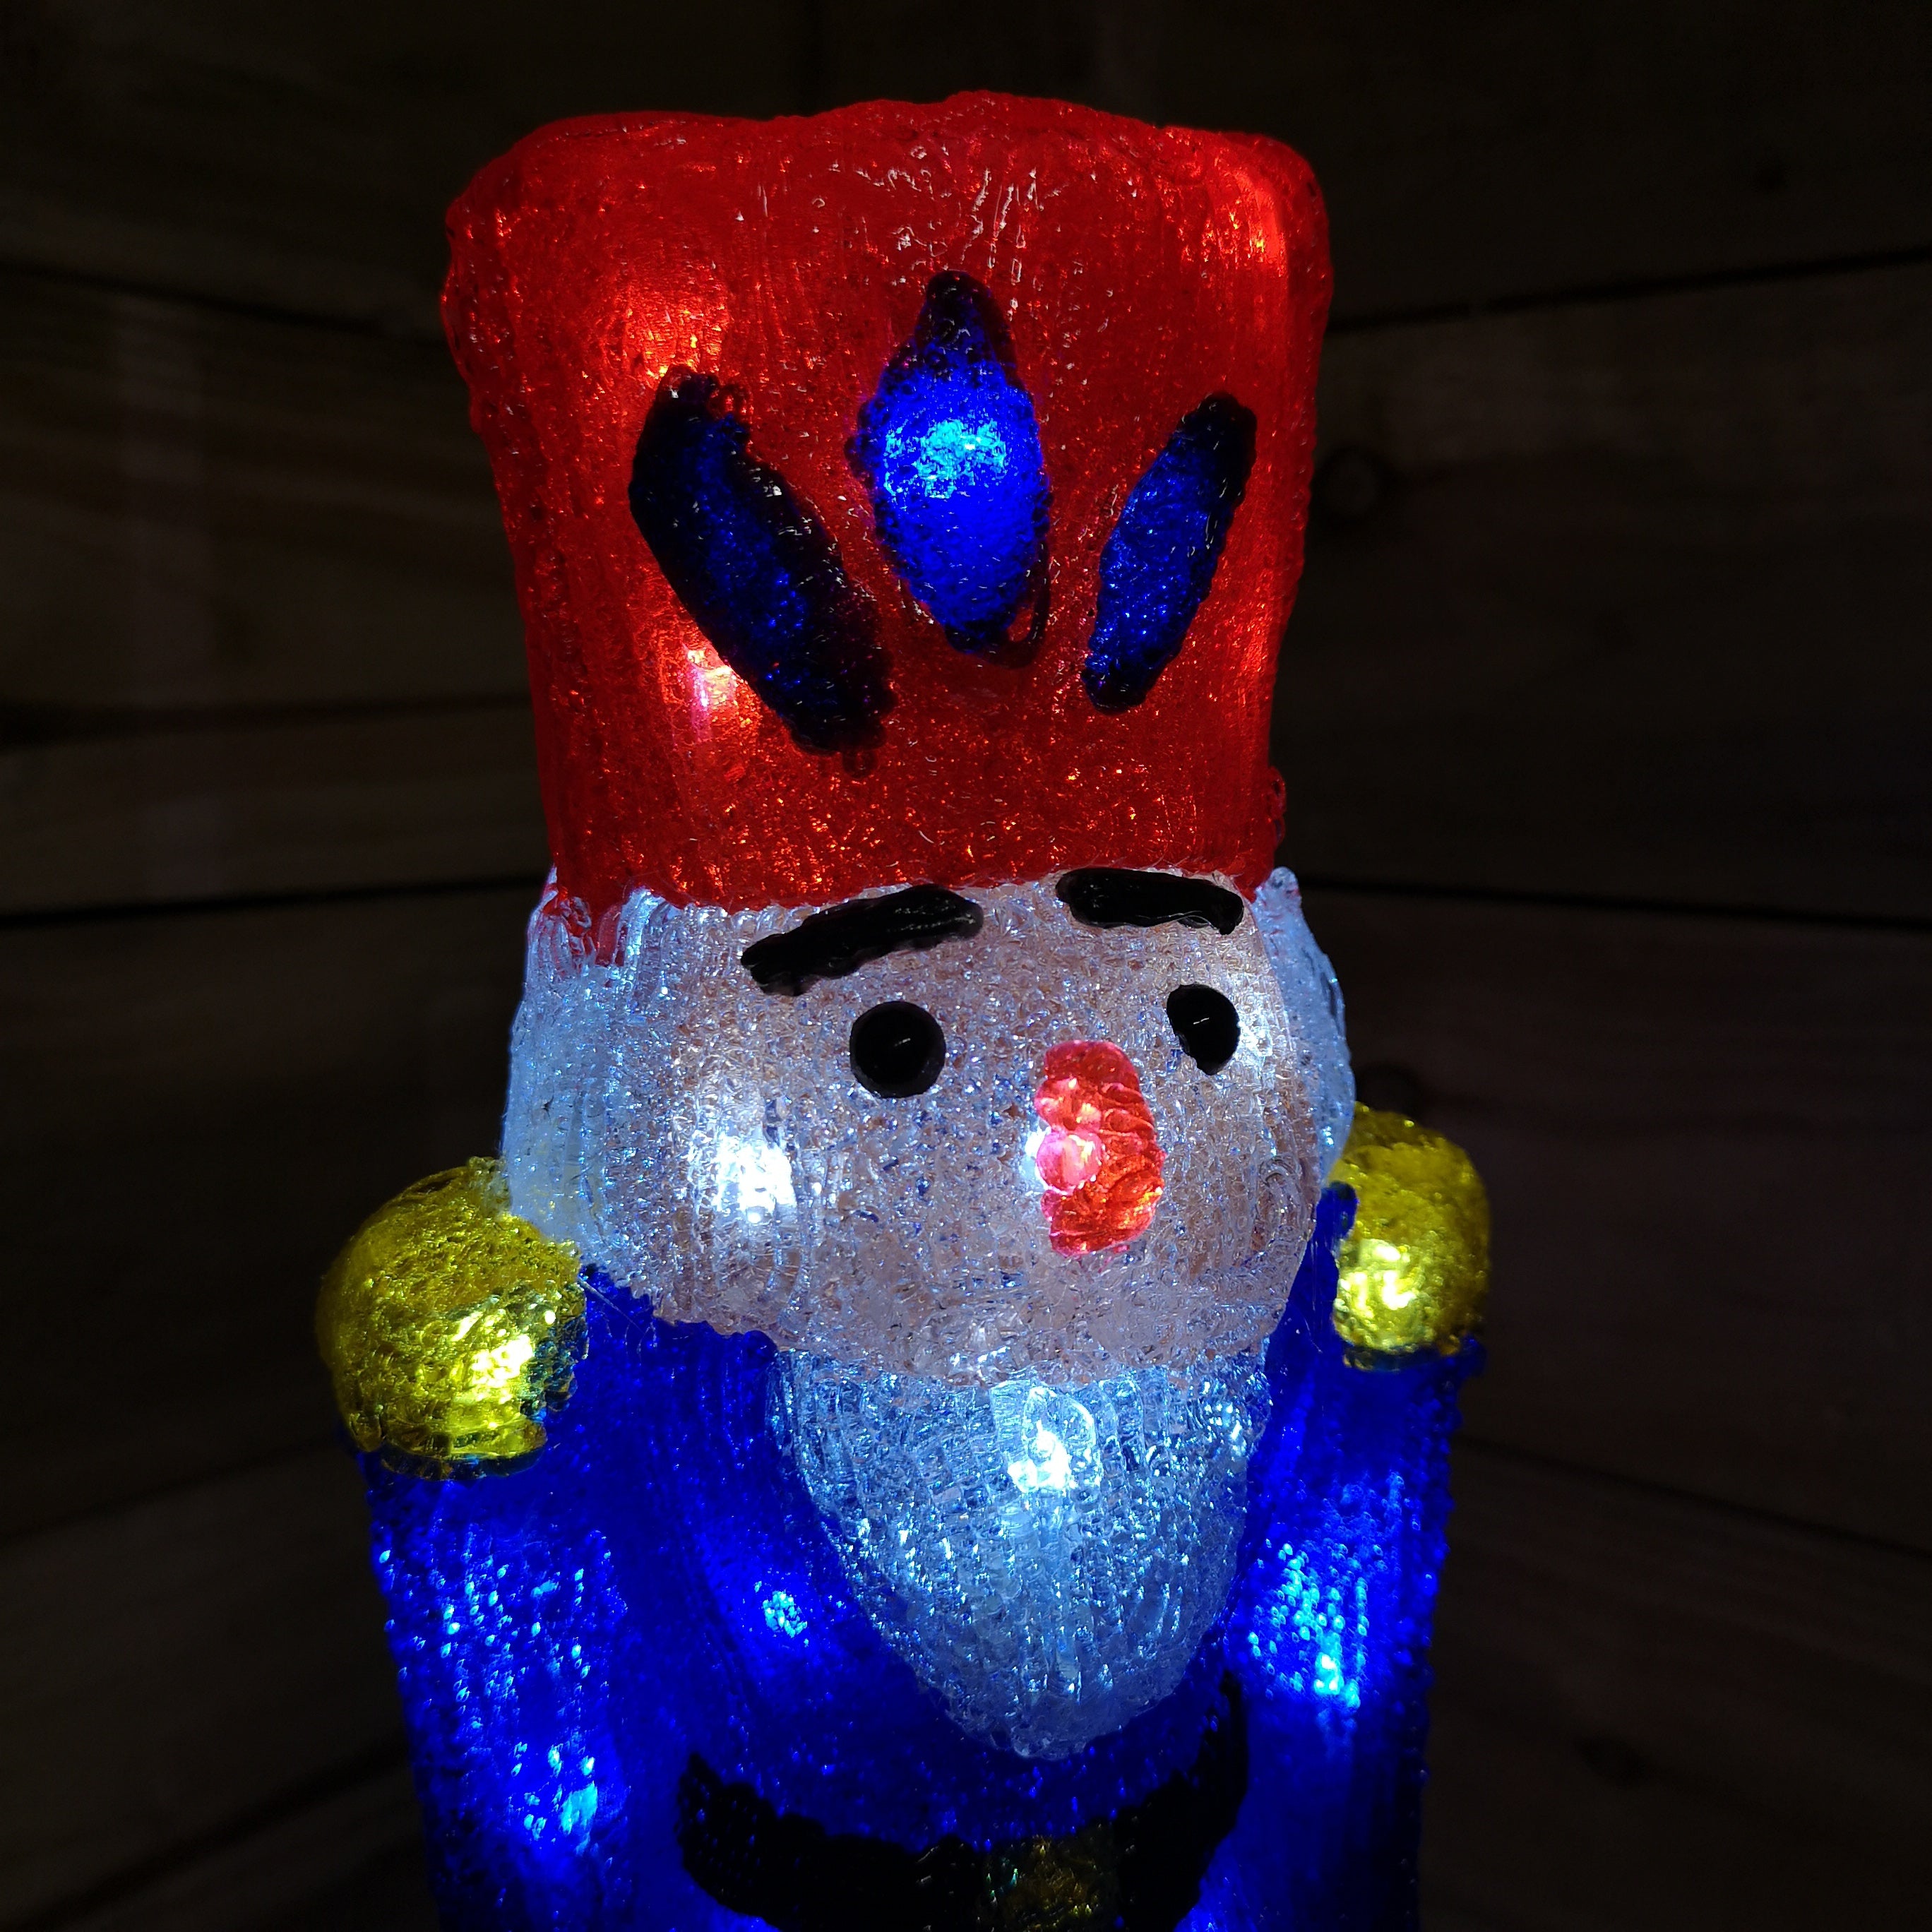 40cm LED Acrylic Christmas Nutcracker Decoration in Choice of 2 Designs